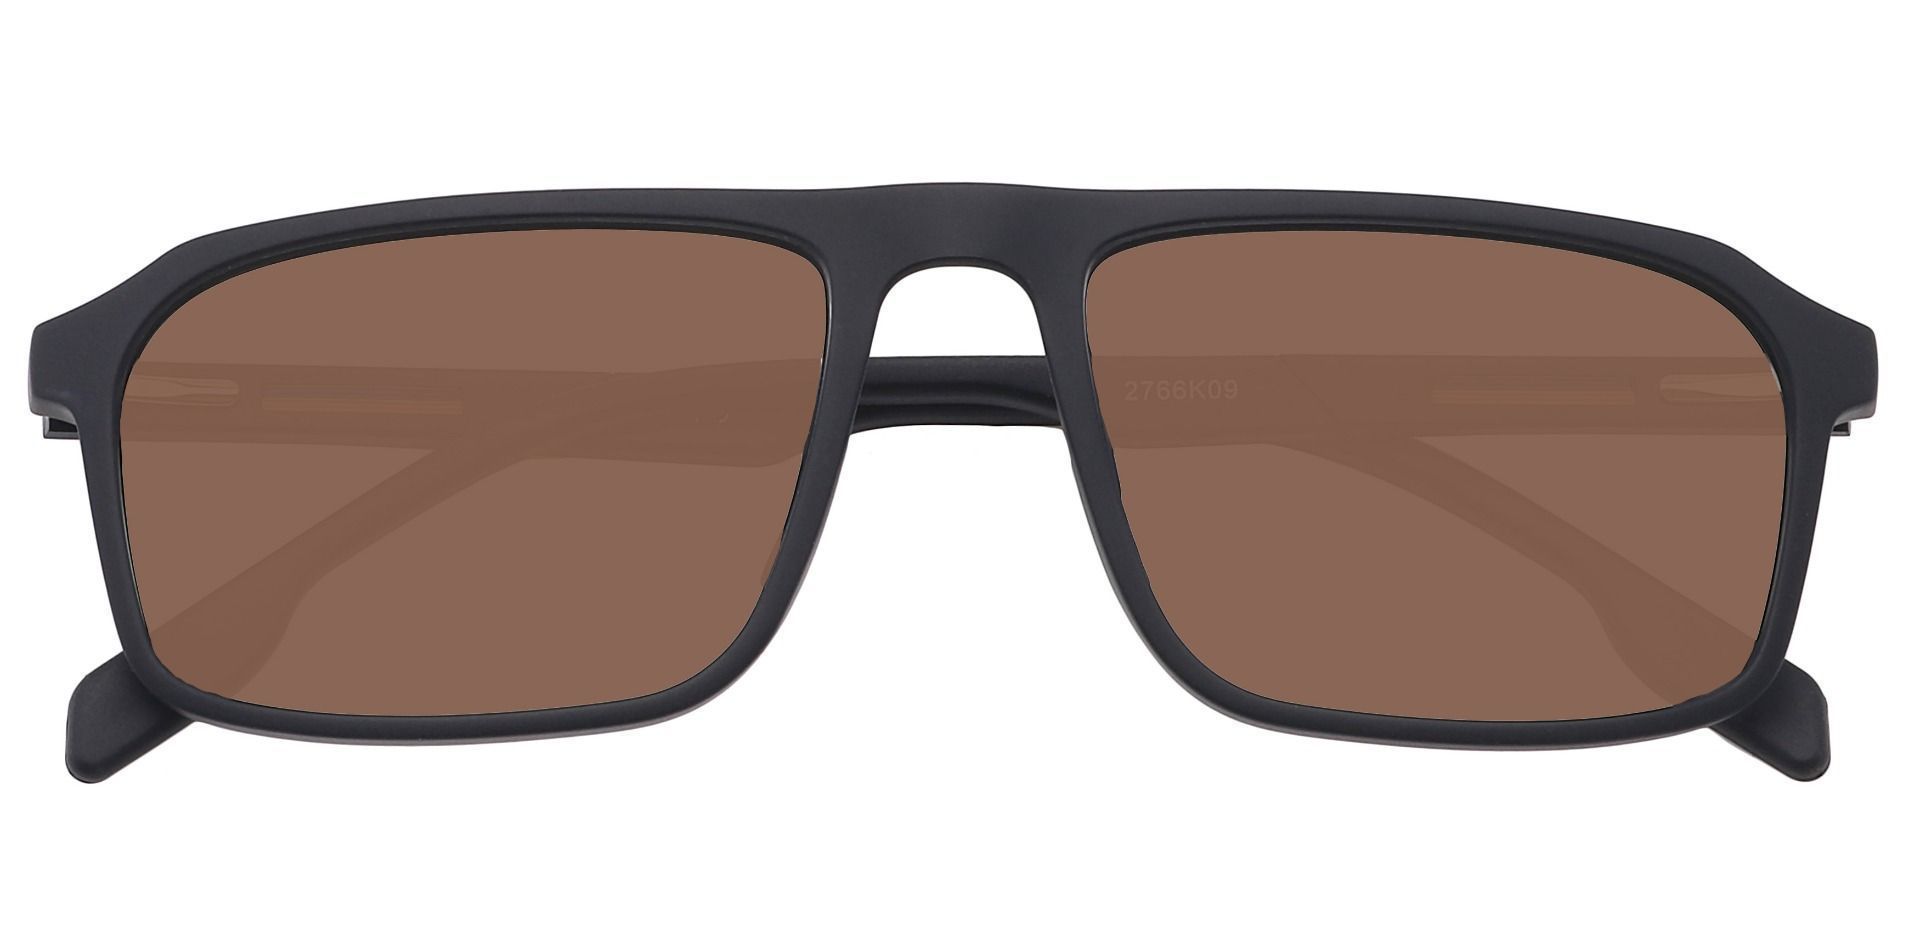 Hector Rectangle Progressive Sunglasses - Black Frame With Brown Lenses